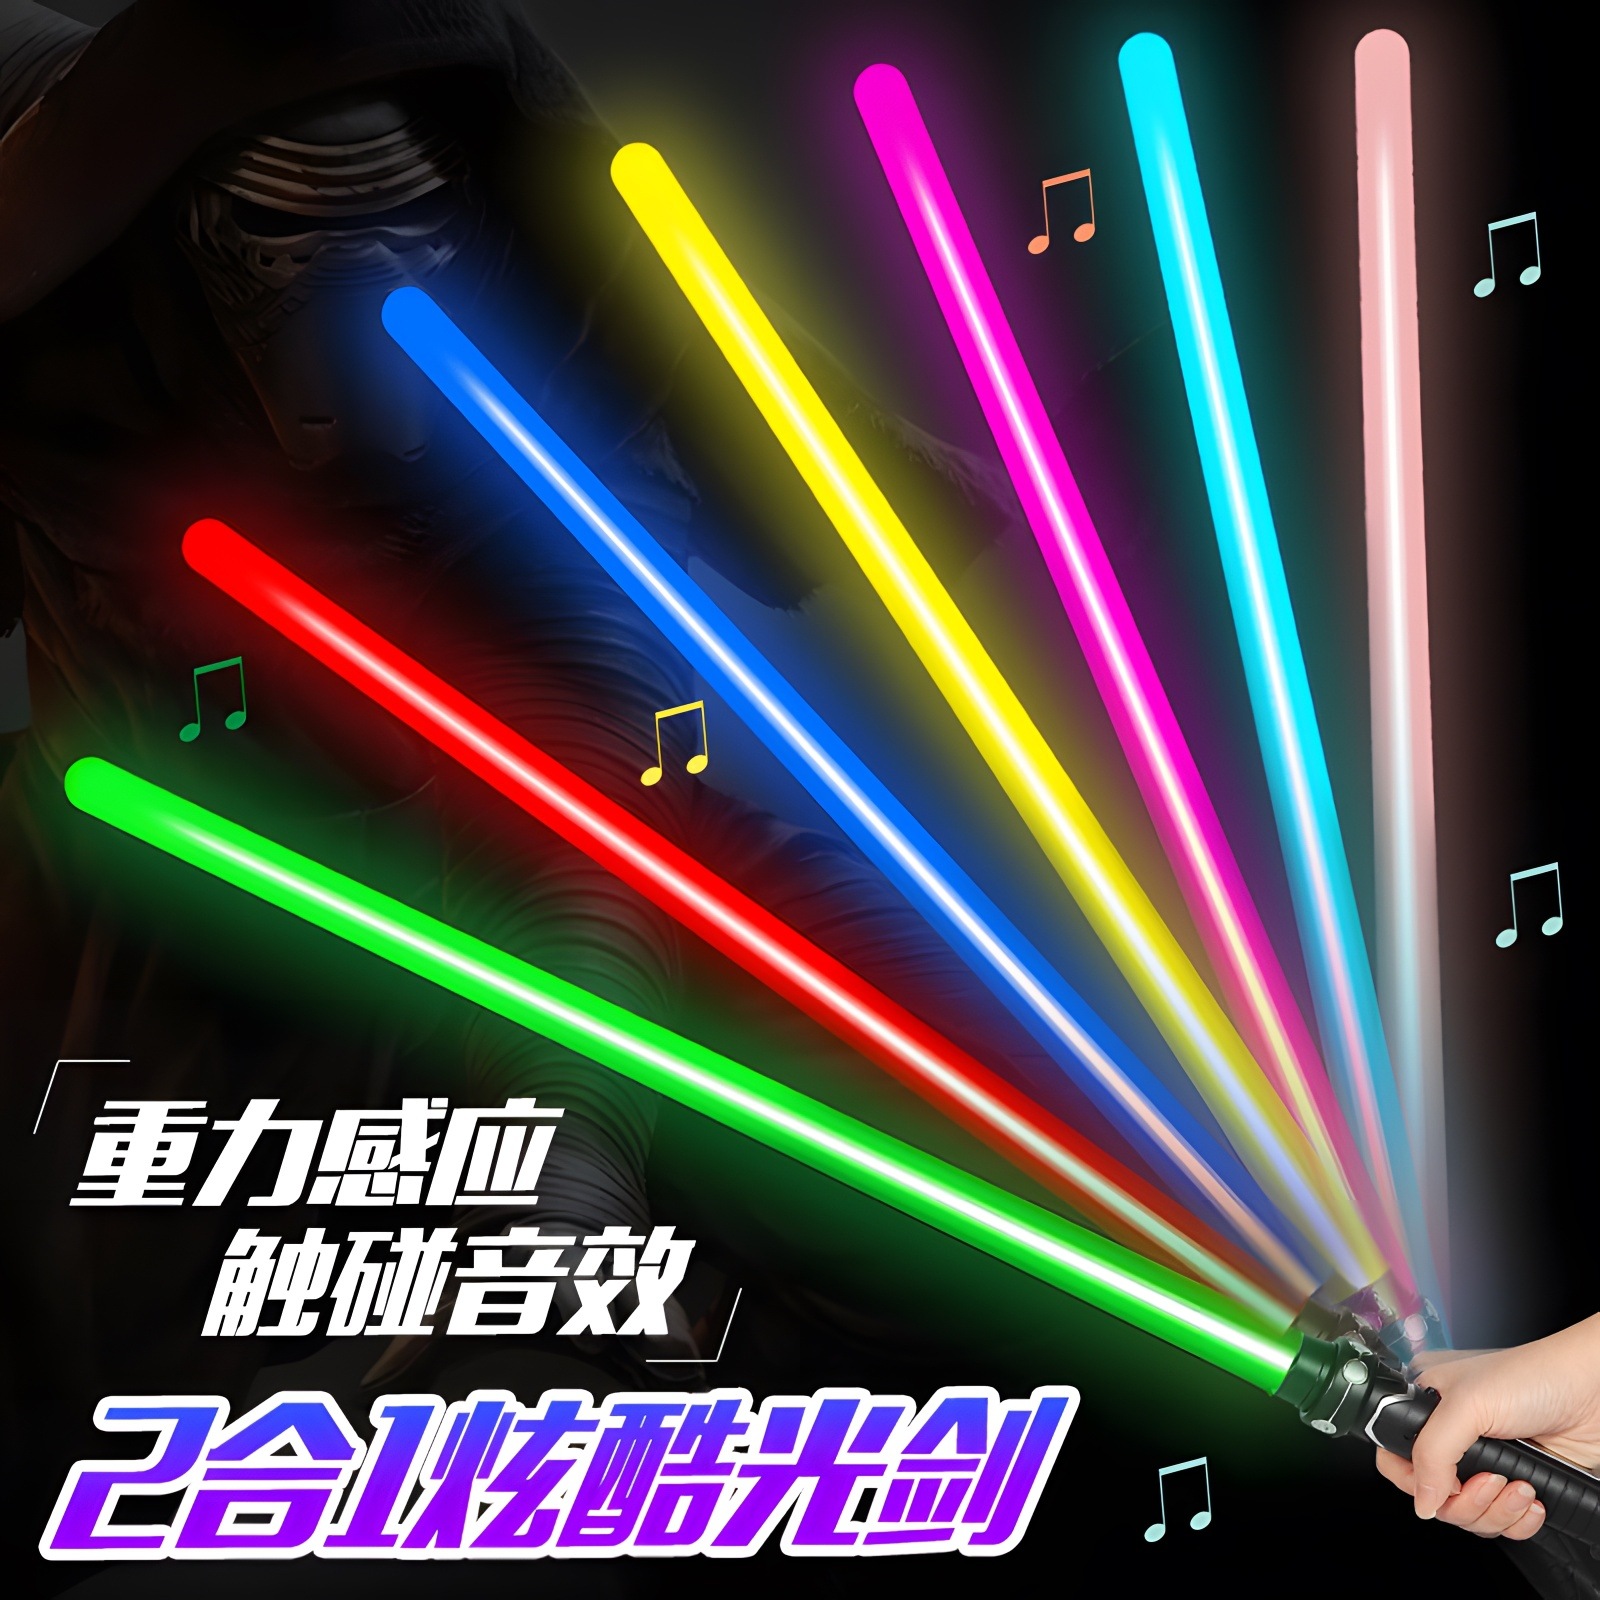 【 Special Offer Wholesale 】 Laser Sword Star Wars Lightsaber Glow Toys Flash Stick Boys and Children's Sword Toys